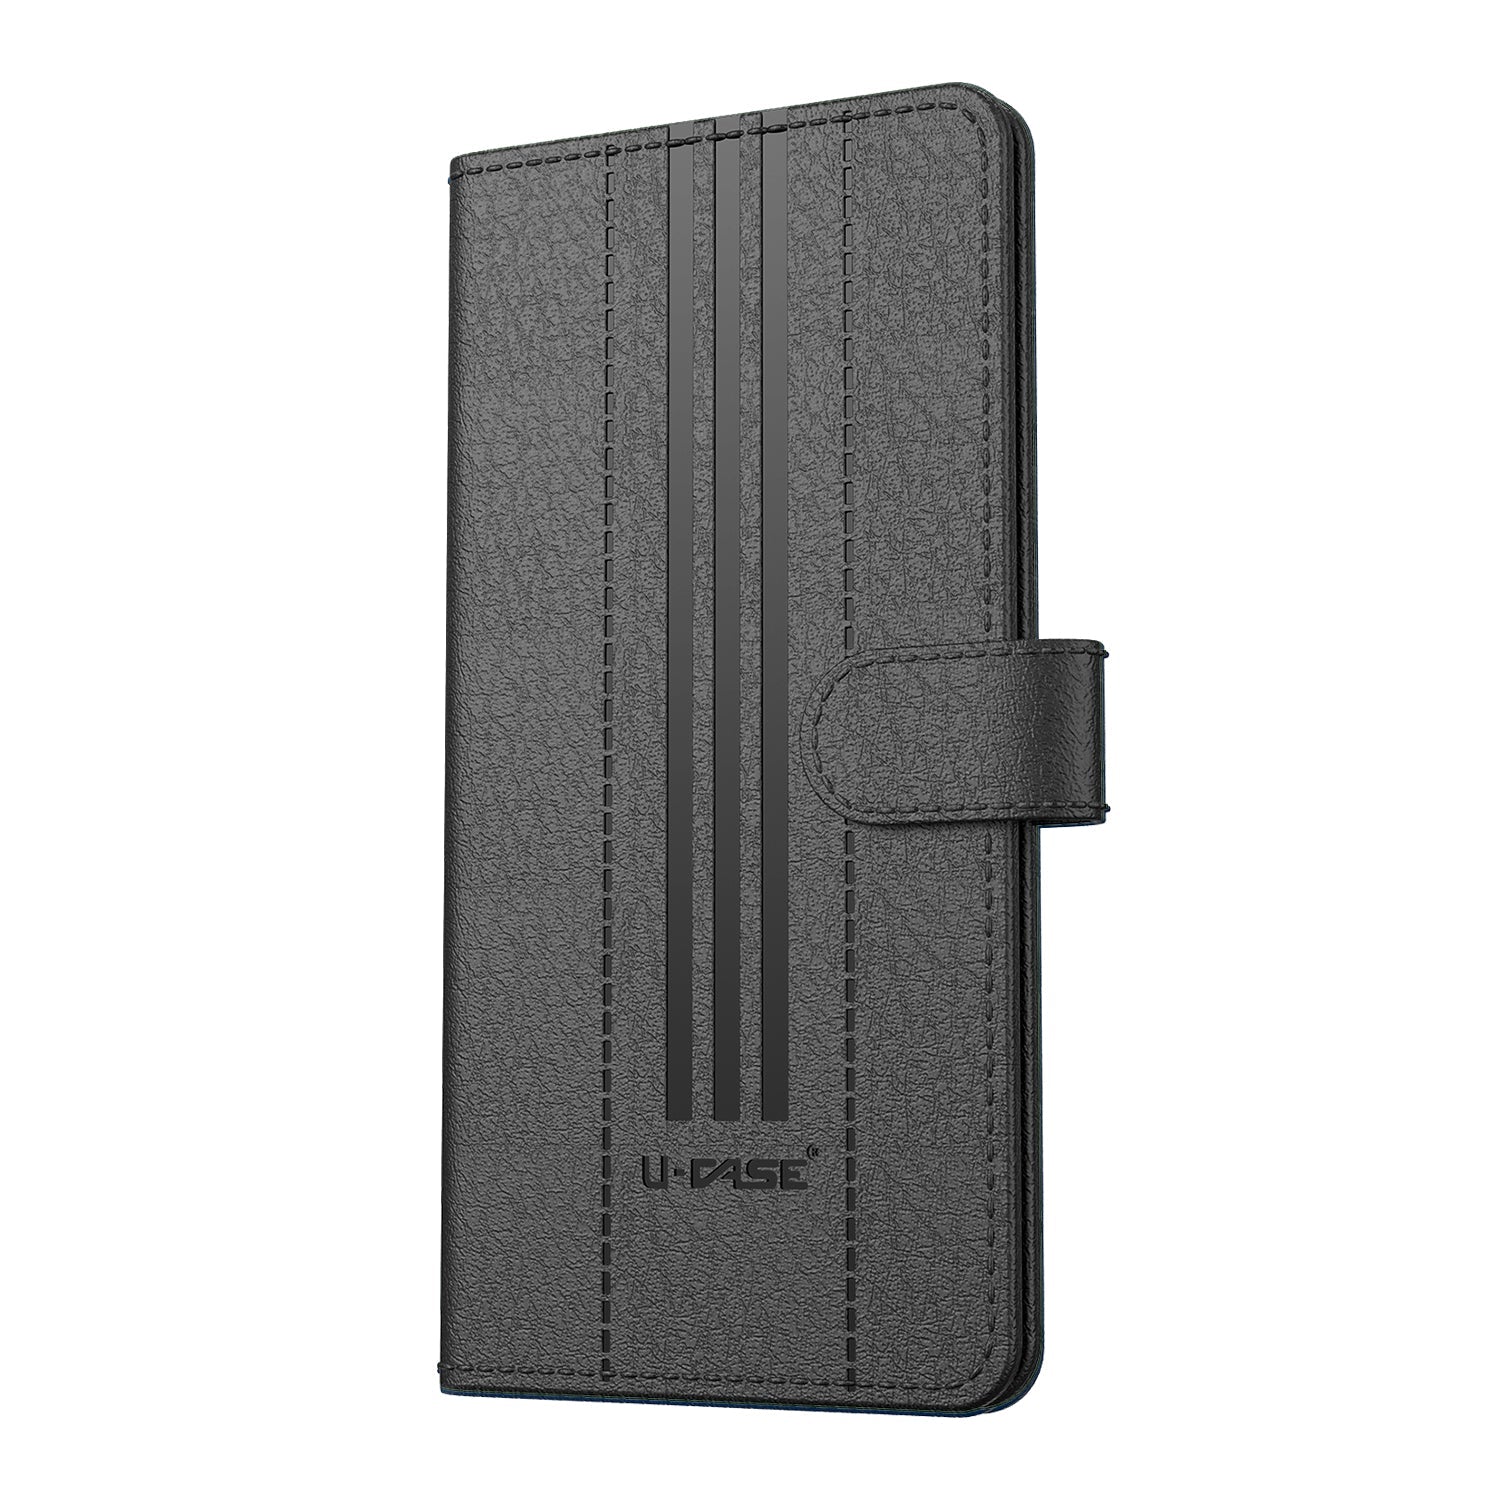 U-CASE Flip Cover for Vivo S1 Pro Vegan Foldable Stand & Pocket Magnetic Closure front